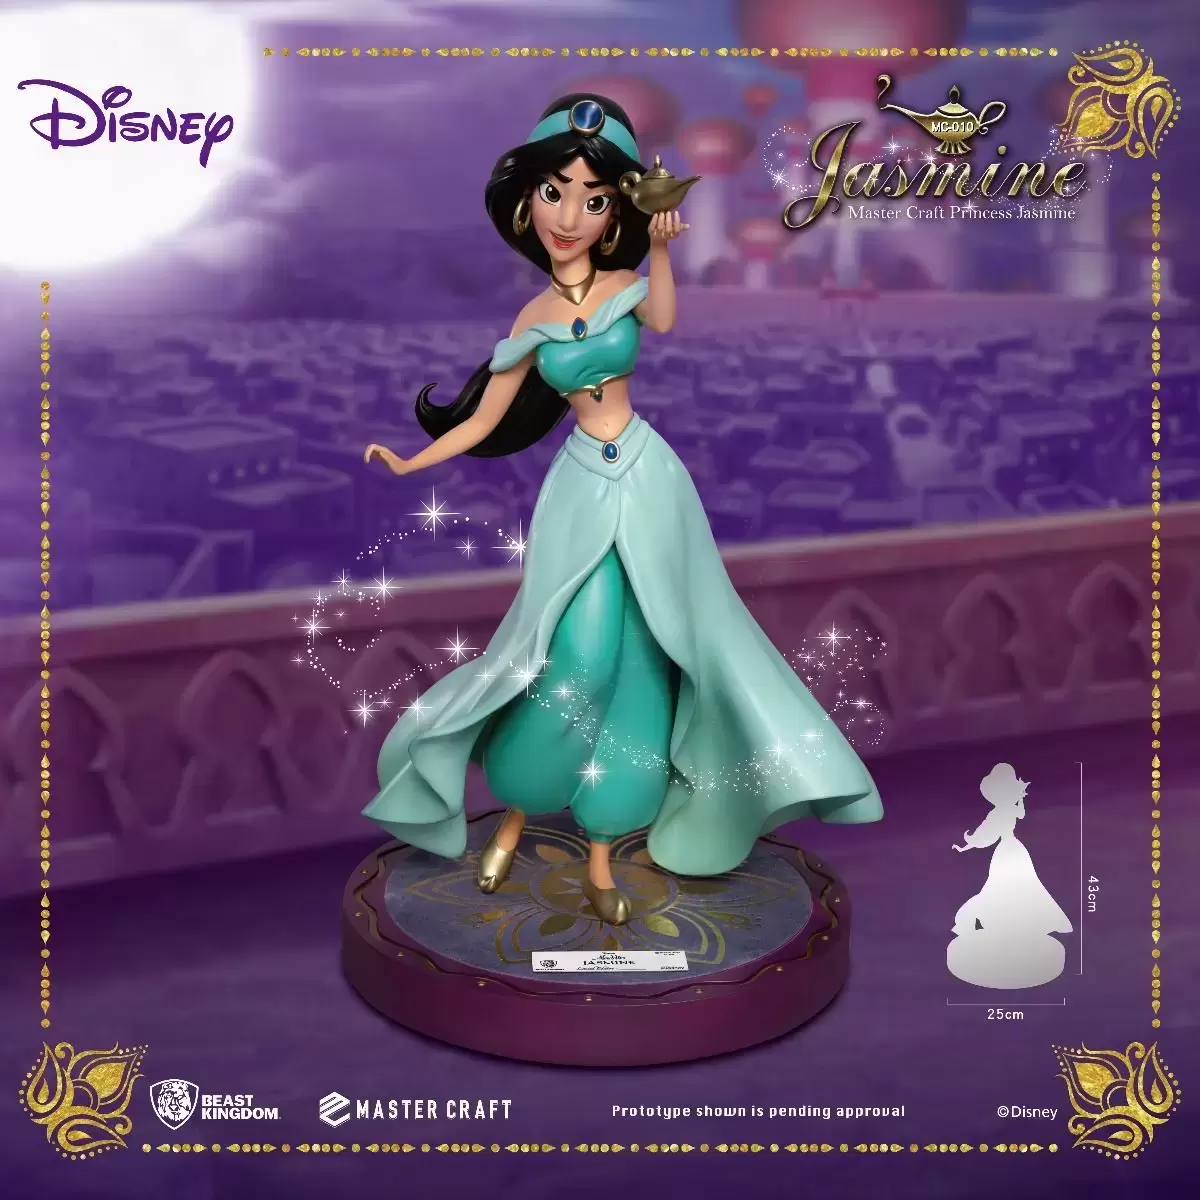 Master Craft - Princess Jasmine